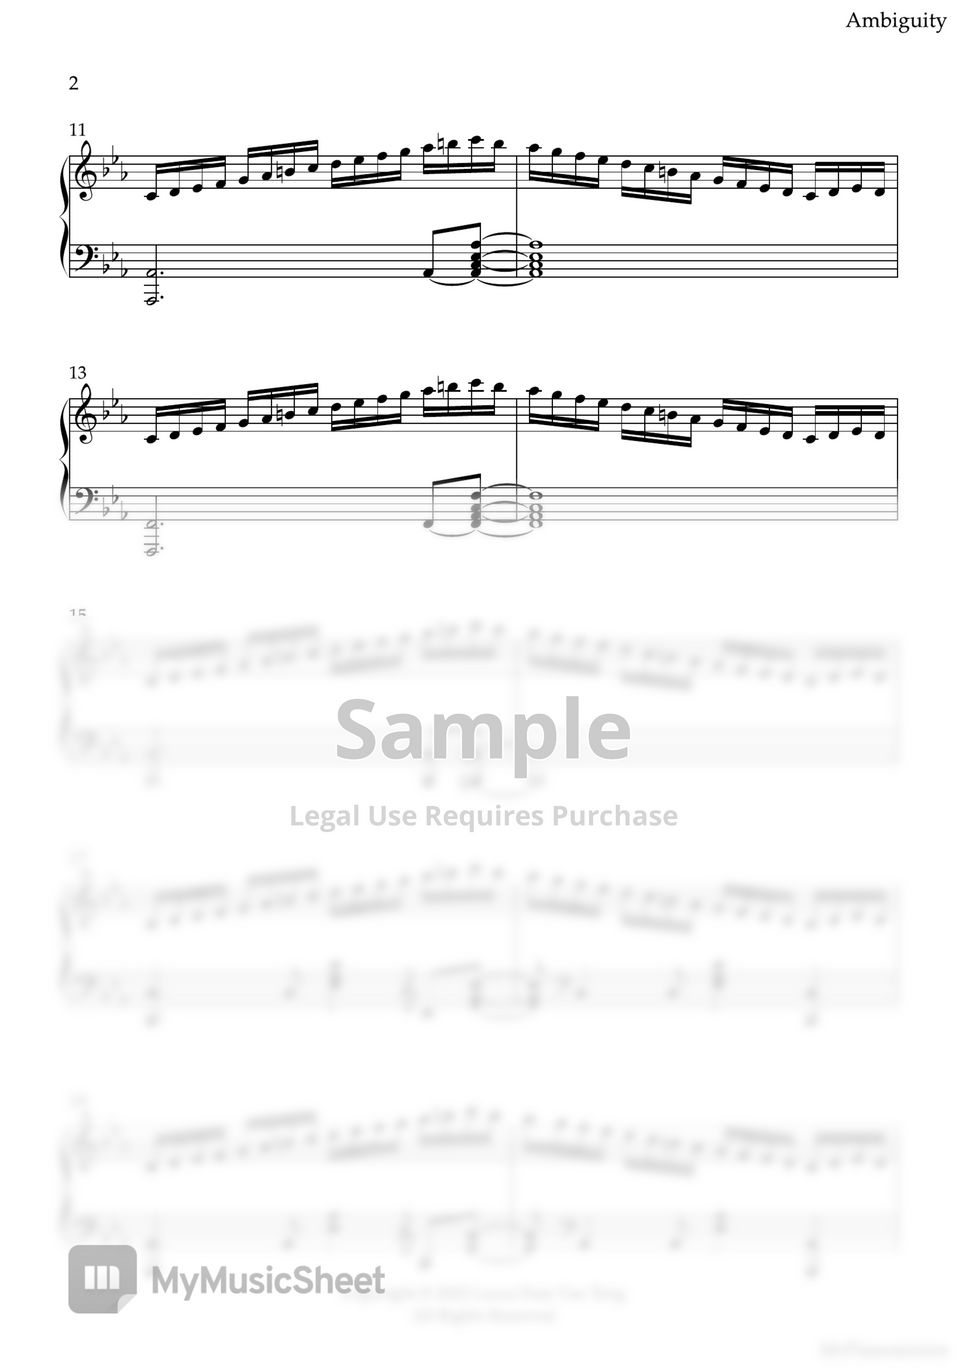 MrPianominion - Piano Exercise - Ambiguity